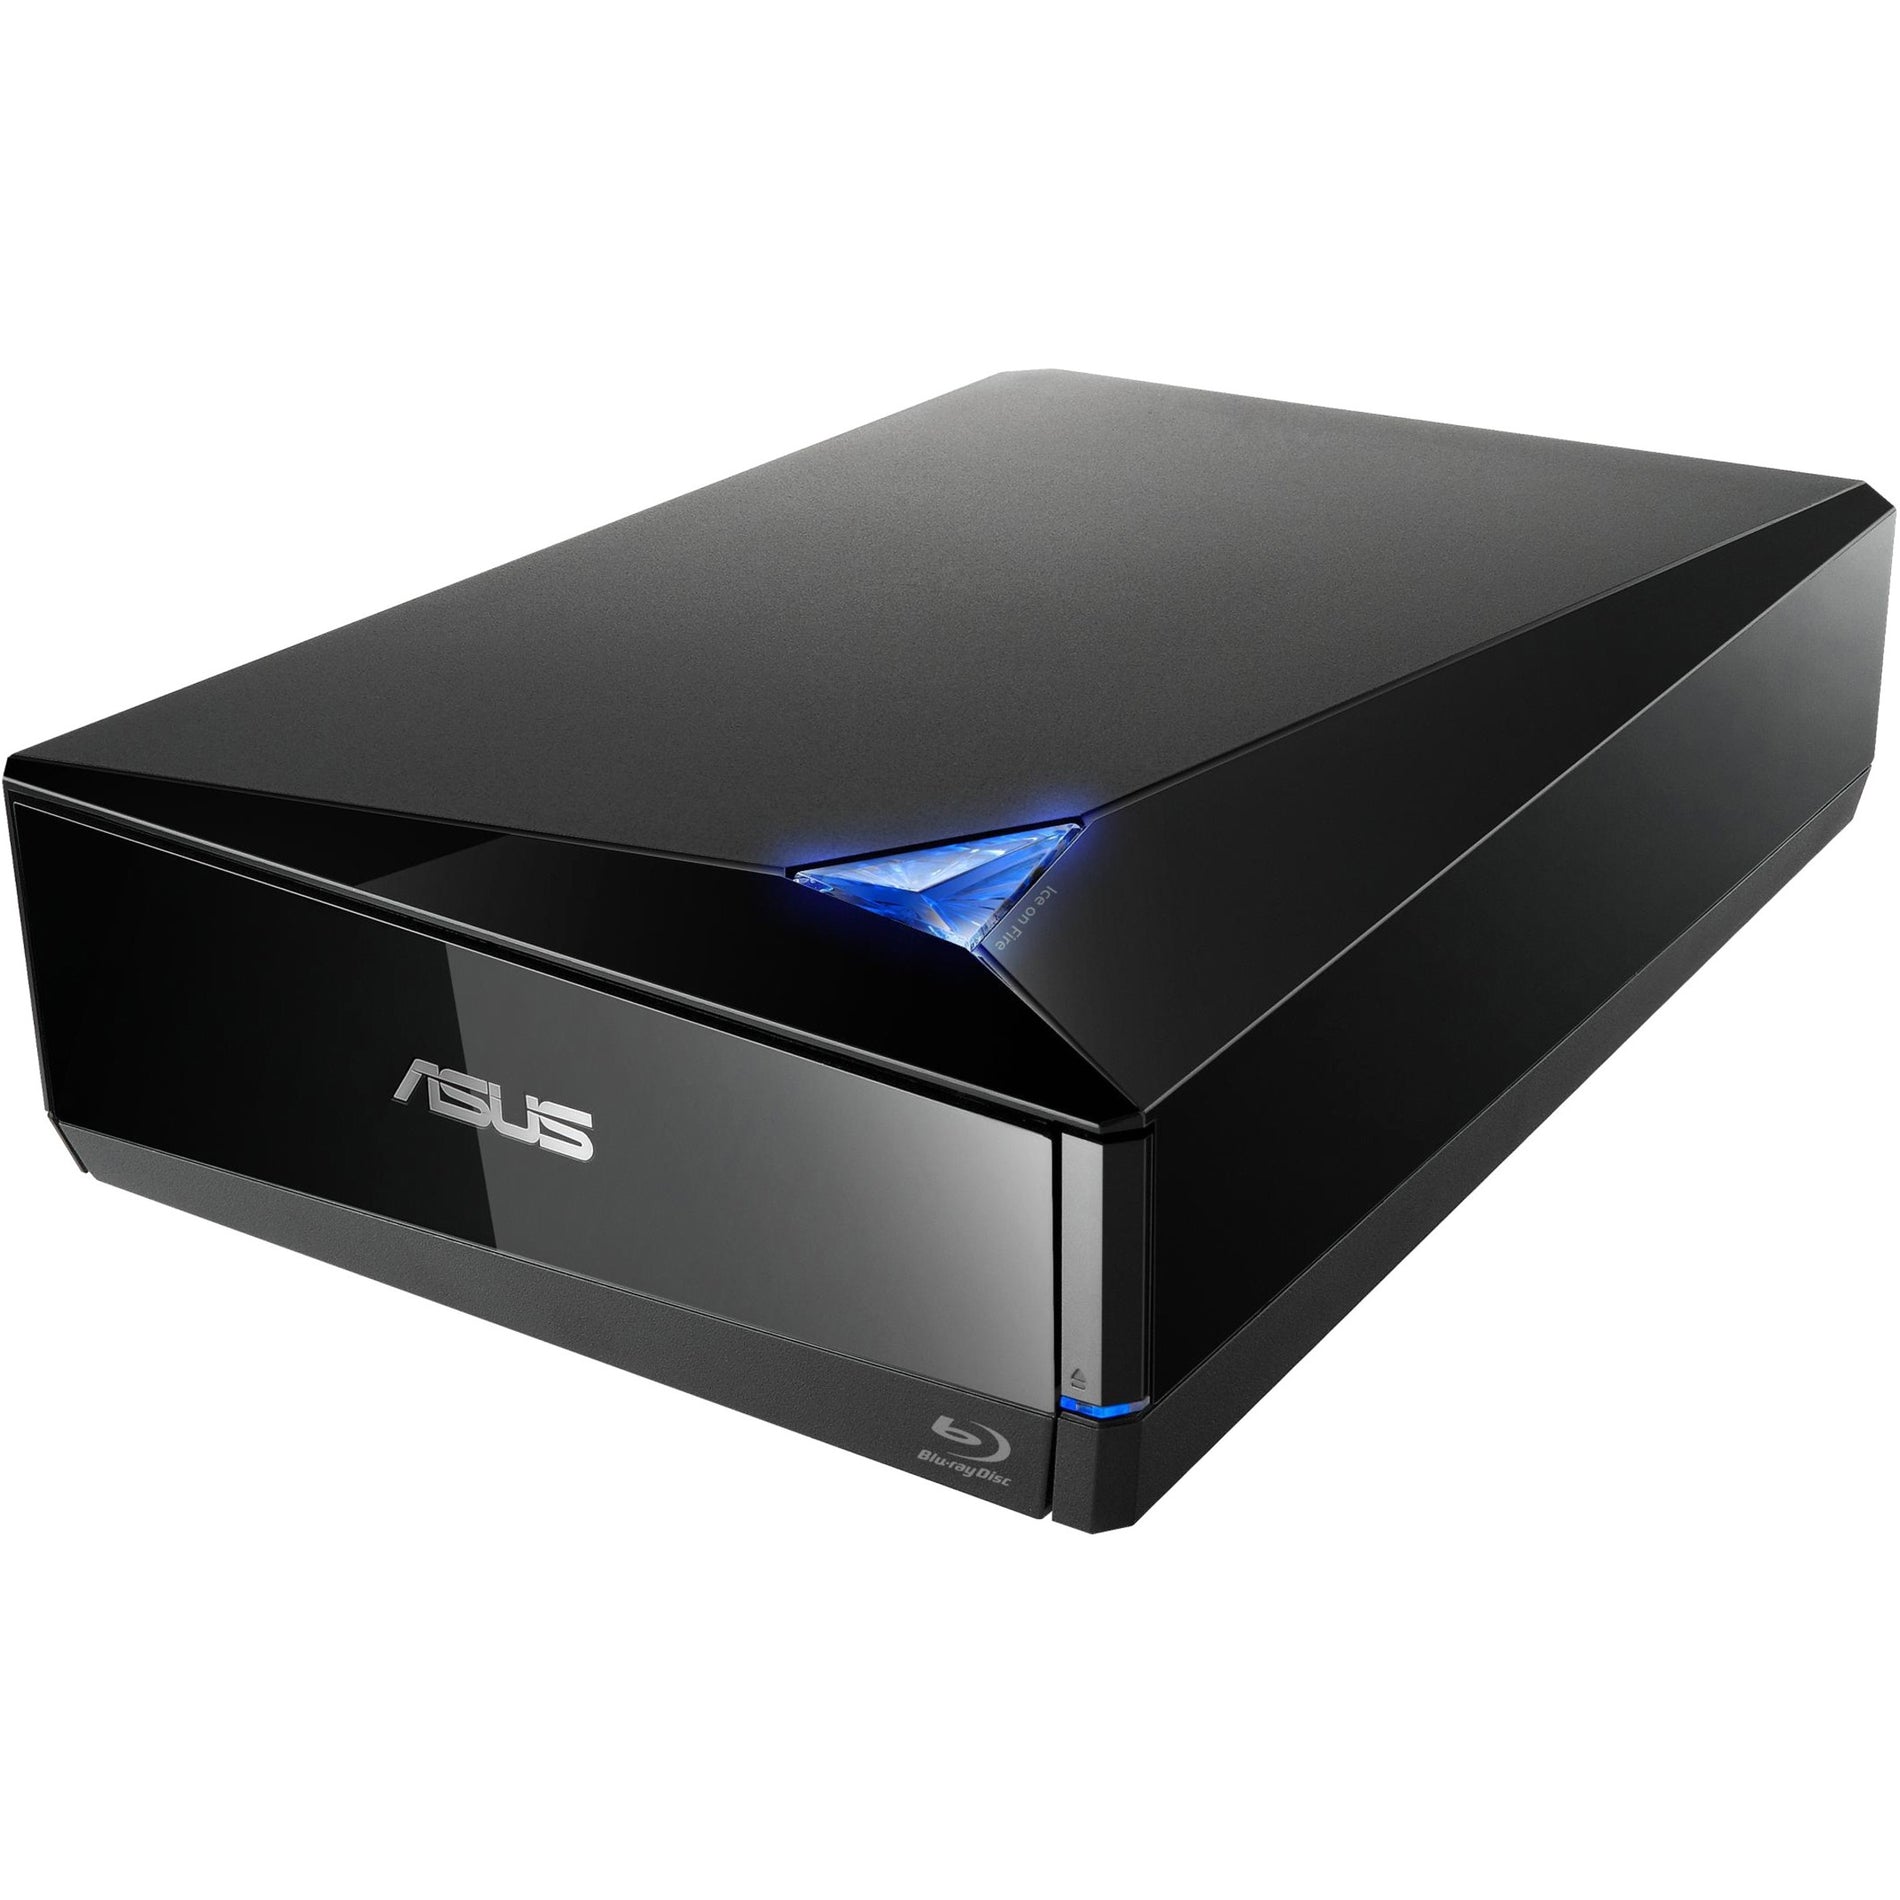 Asus BW-16D1X-U Turbo Drive Blu-ray Writer, Powerful 16X Writing Speed and USB 3.0